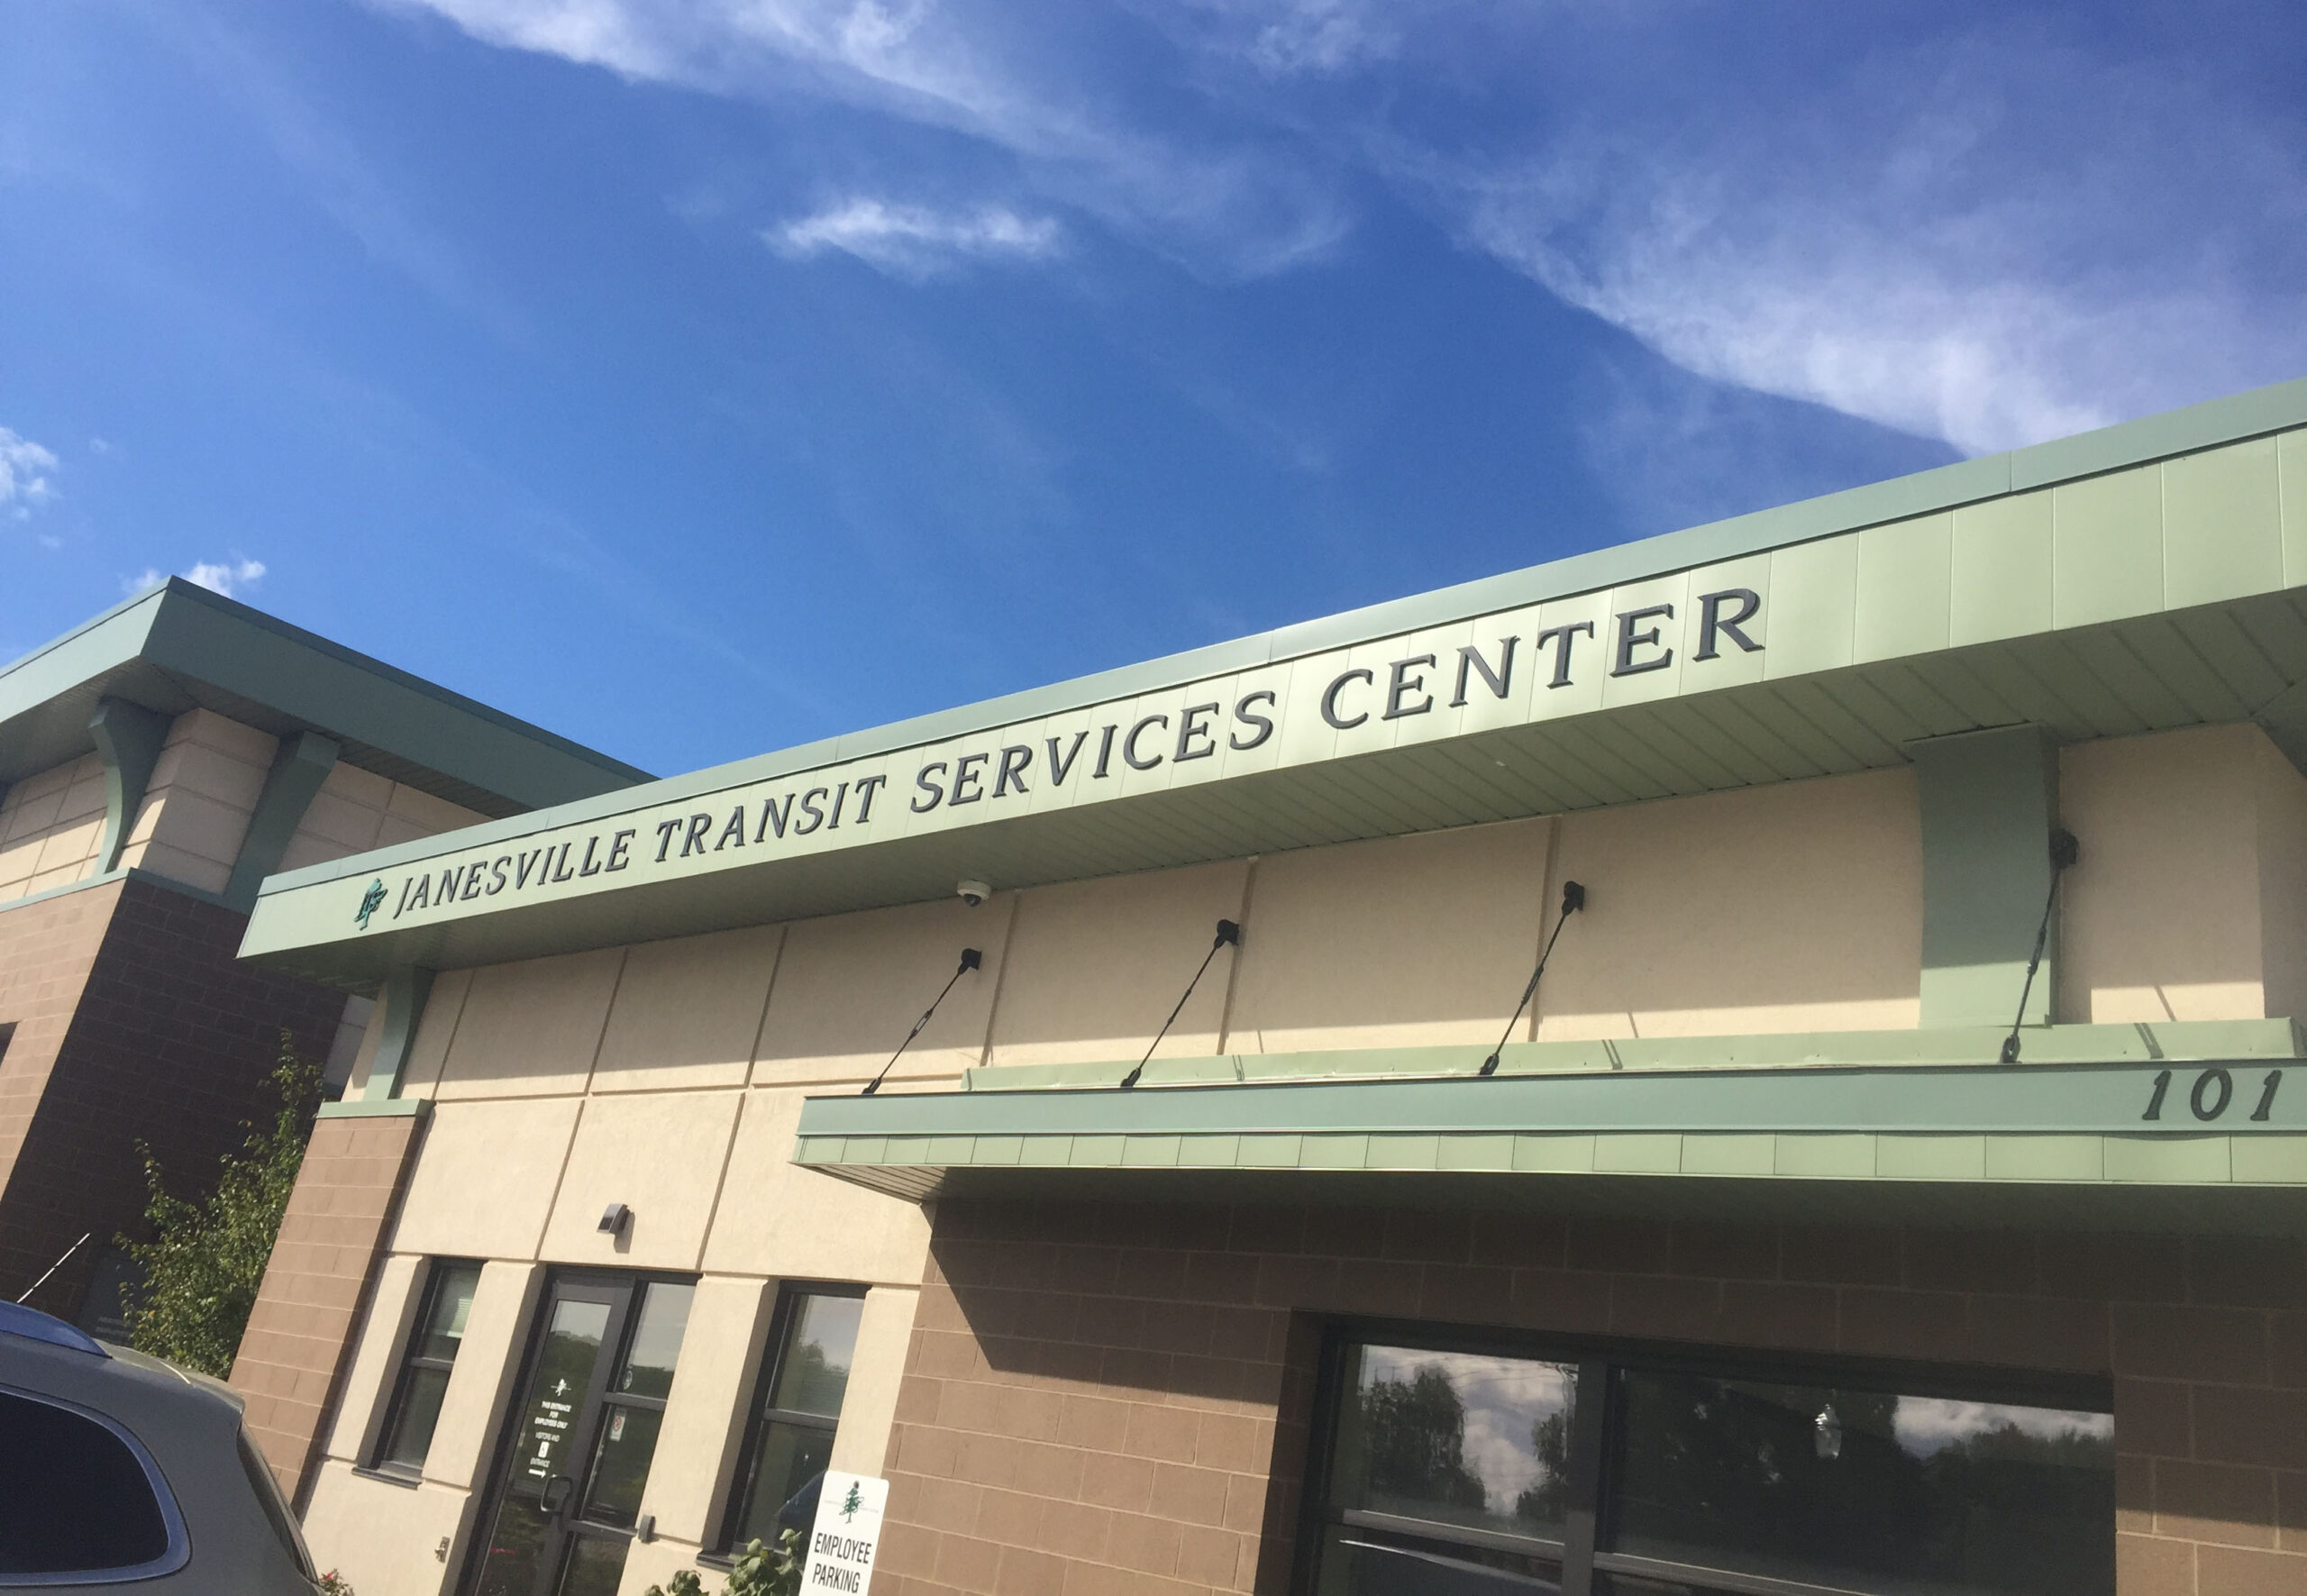 Janesville Transit Services Center